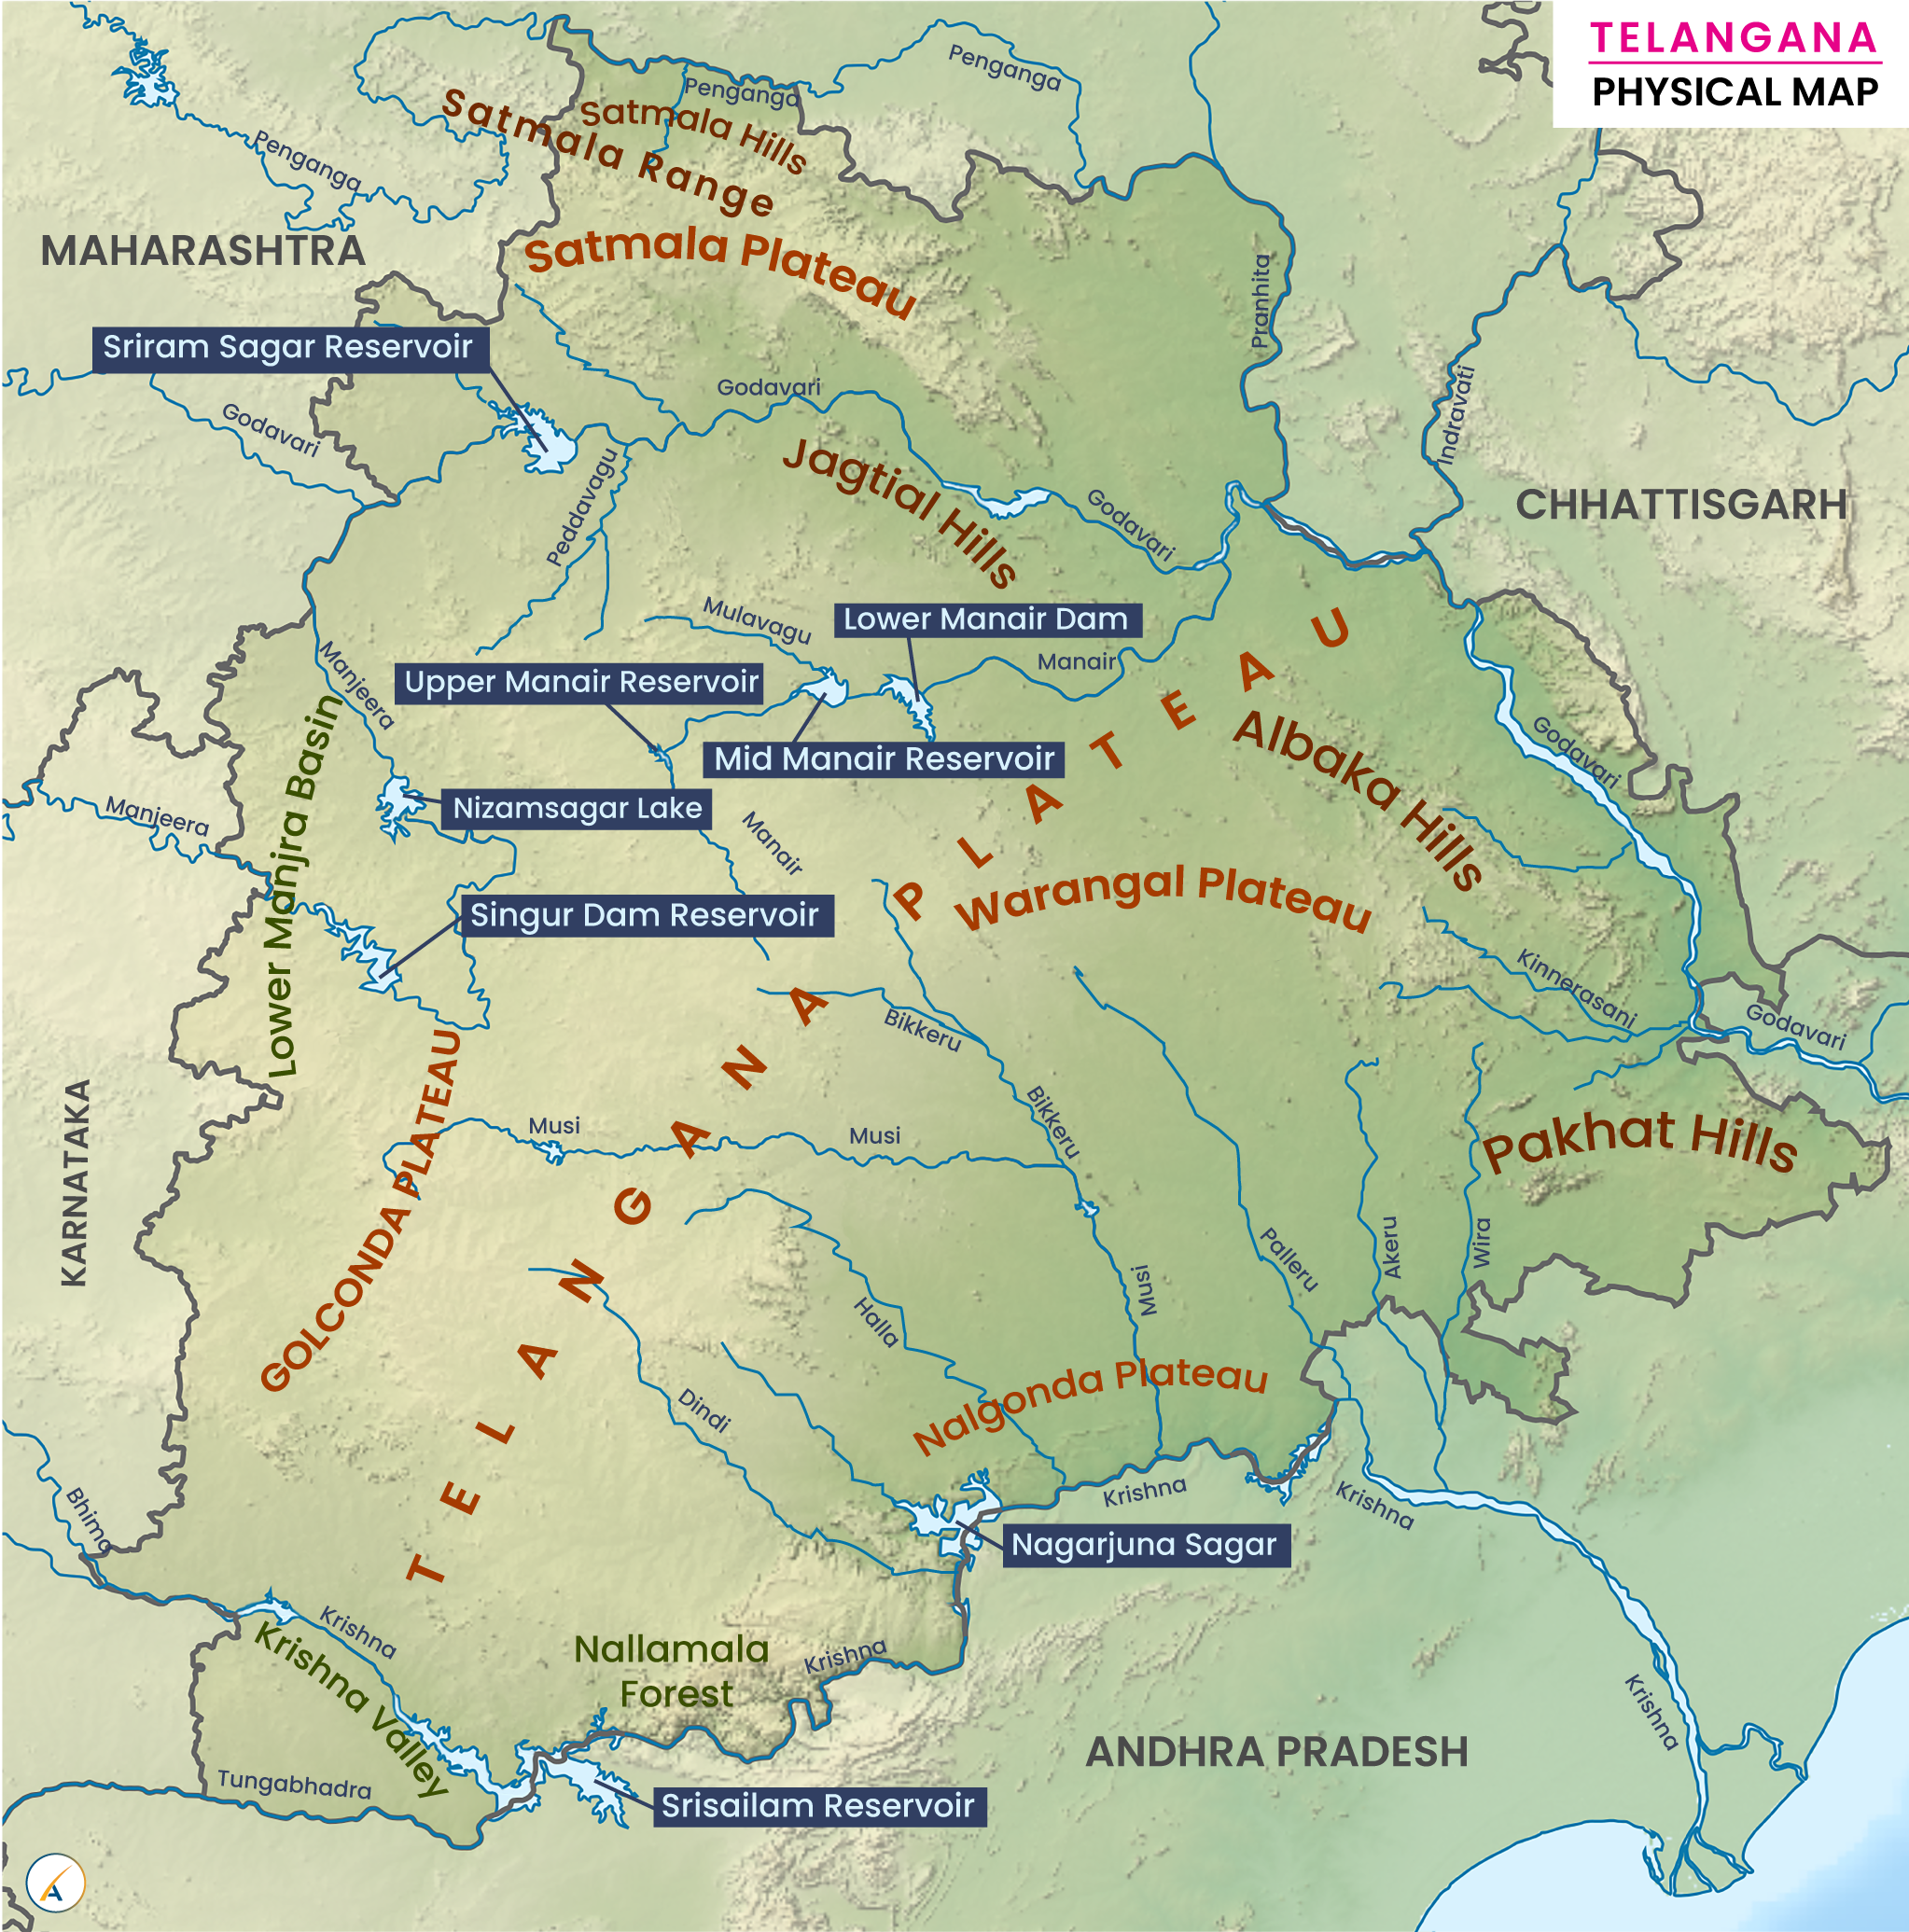 Telangana Physical Map